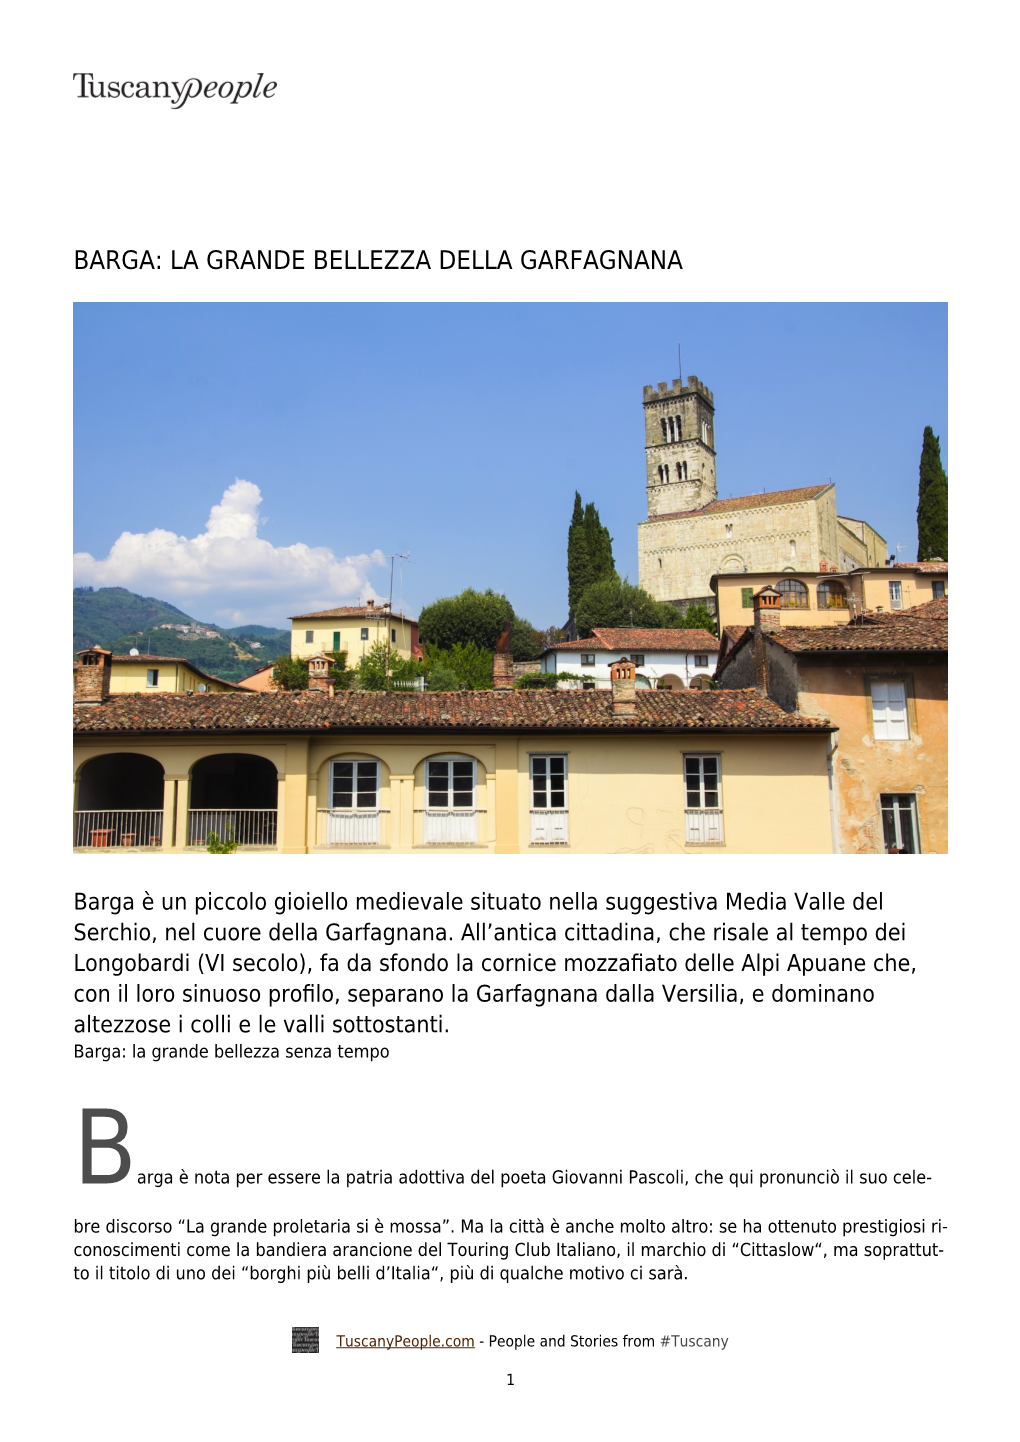 Barga: La Grande Bellezza Della Garfagnana